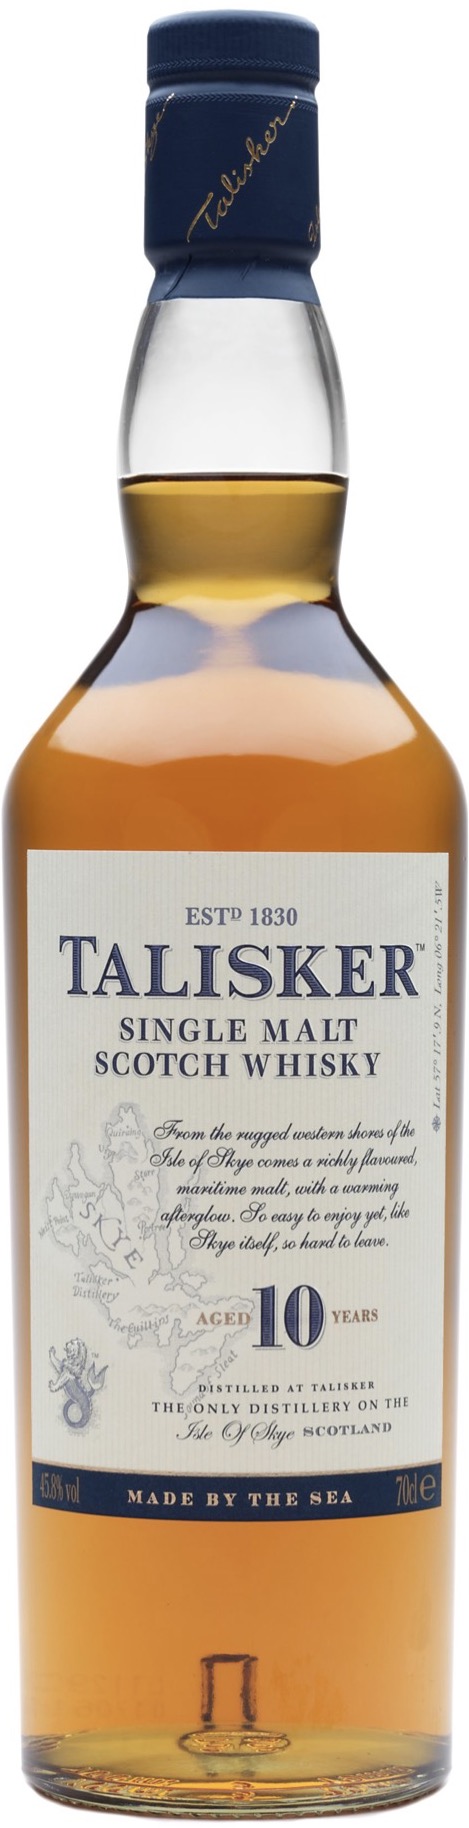 Talisker Isle of Skye Malt Scotch Whisky 10 Years Old GP 45,8% vol. 0,7L